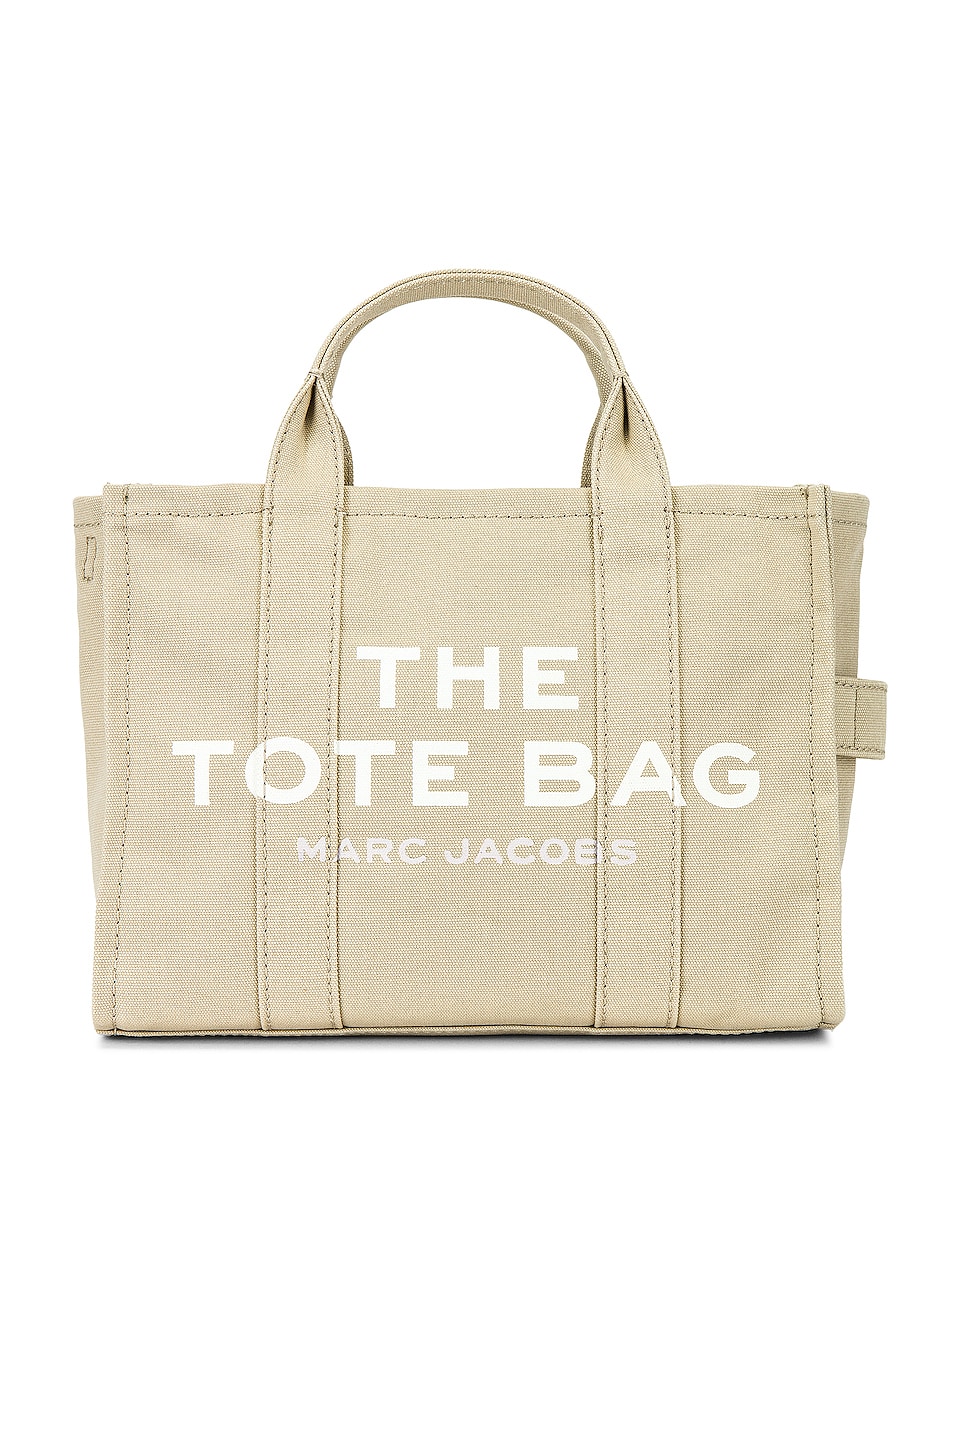 Marc Jacobs The Medium Tote Bag in Beige | REVOLVE